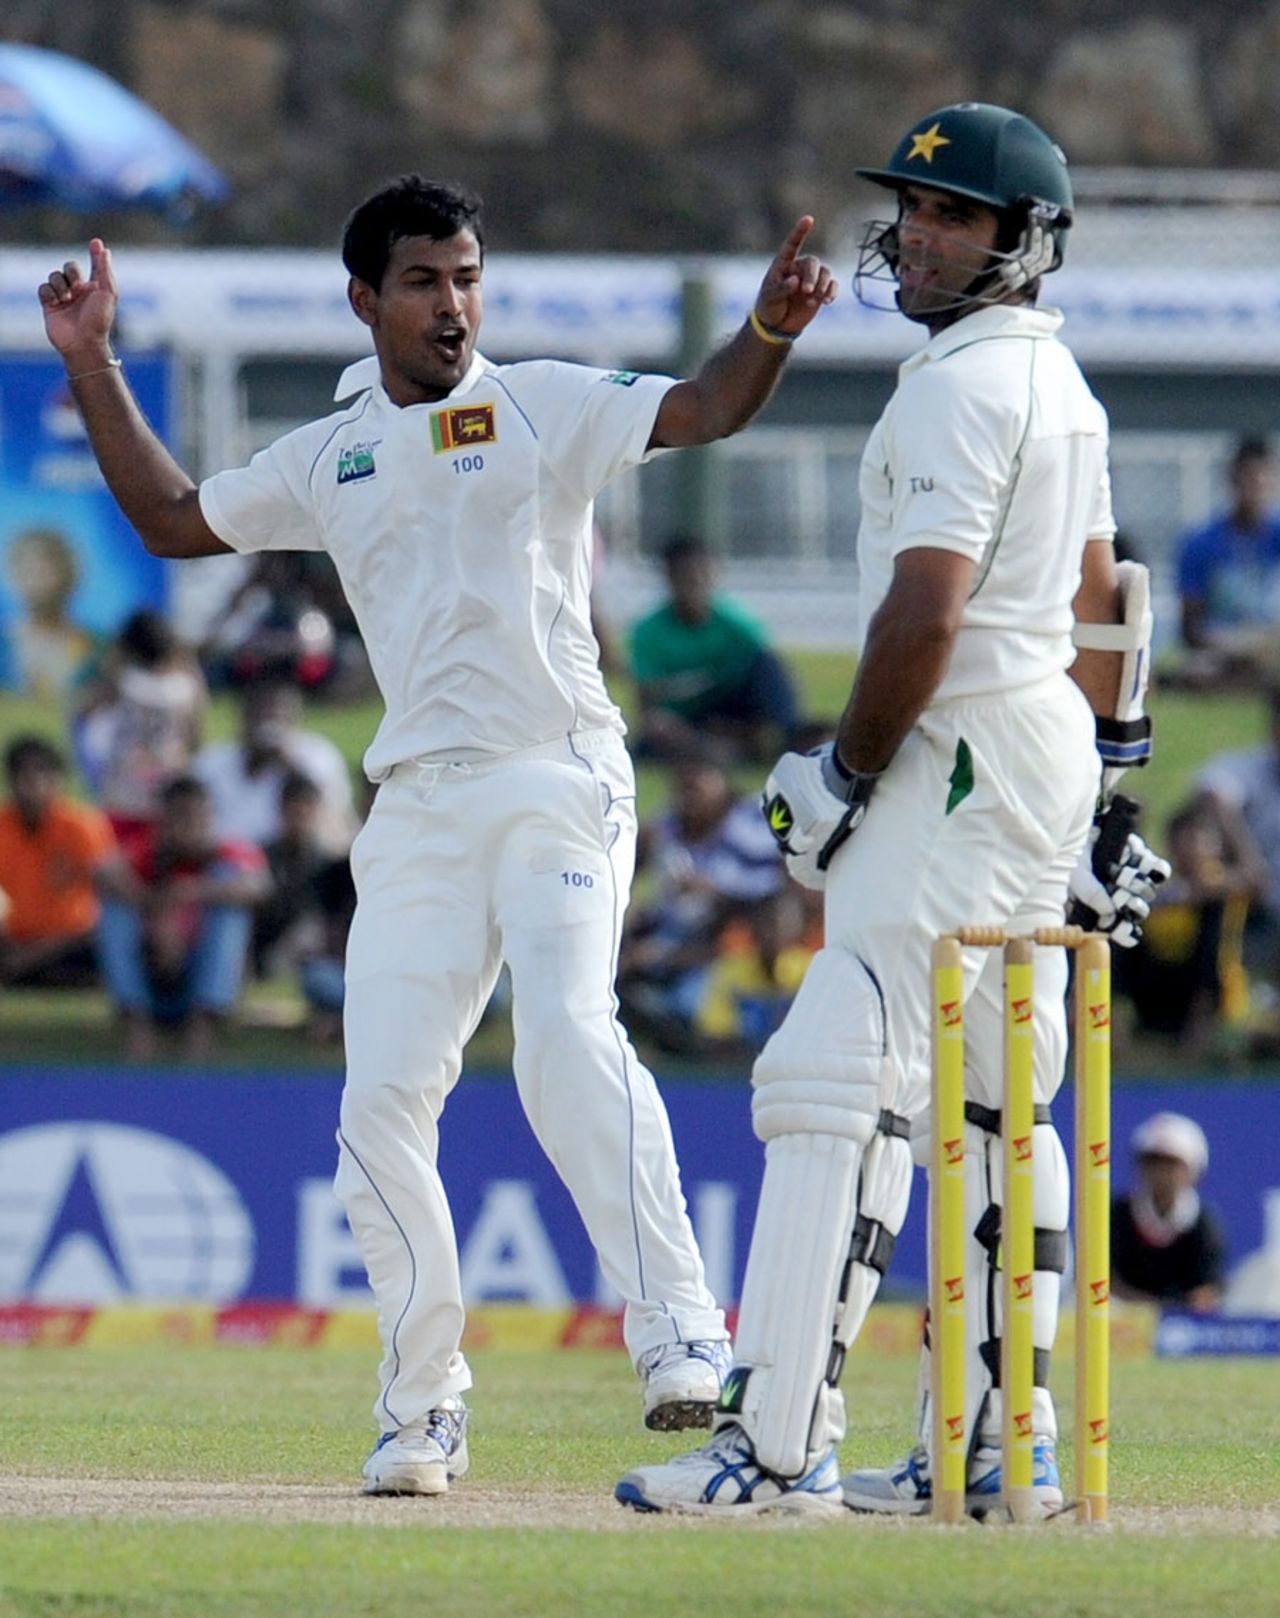 Nuwan Kulasekara had Taufeeq Umar lbw, Sri Lanka v Pakistan, 1st Test, Galle, 2nd day, June 23, 2012